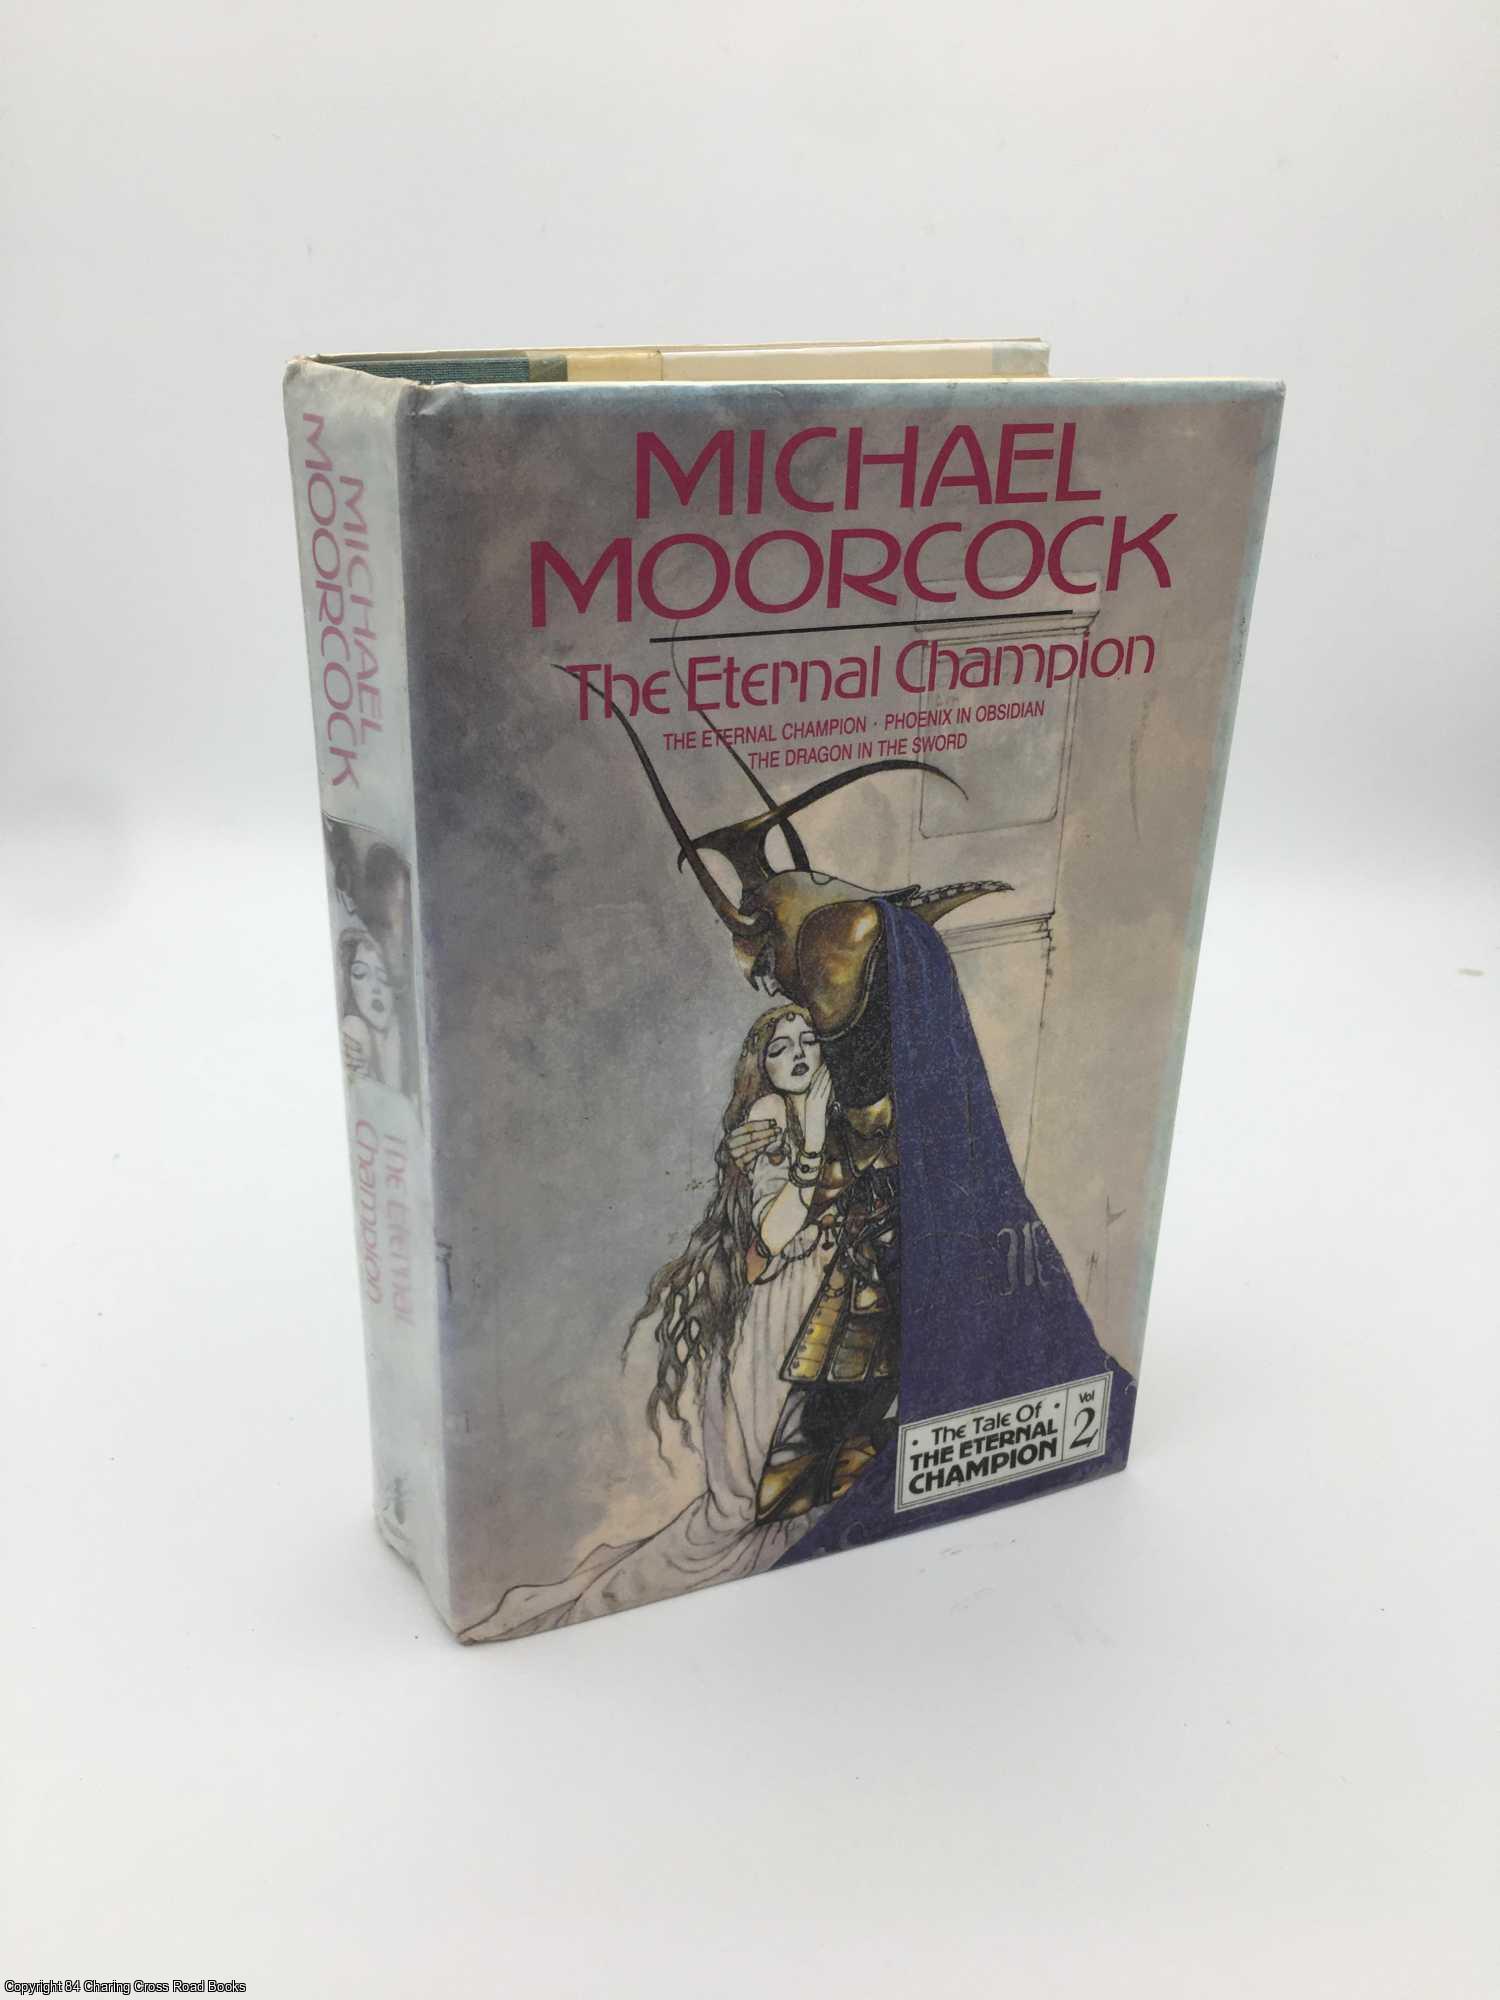 Moorcock, Michael - The Eternal Champion